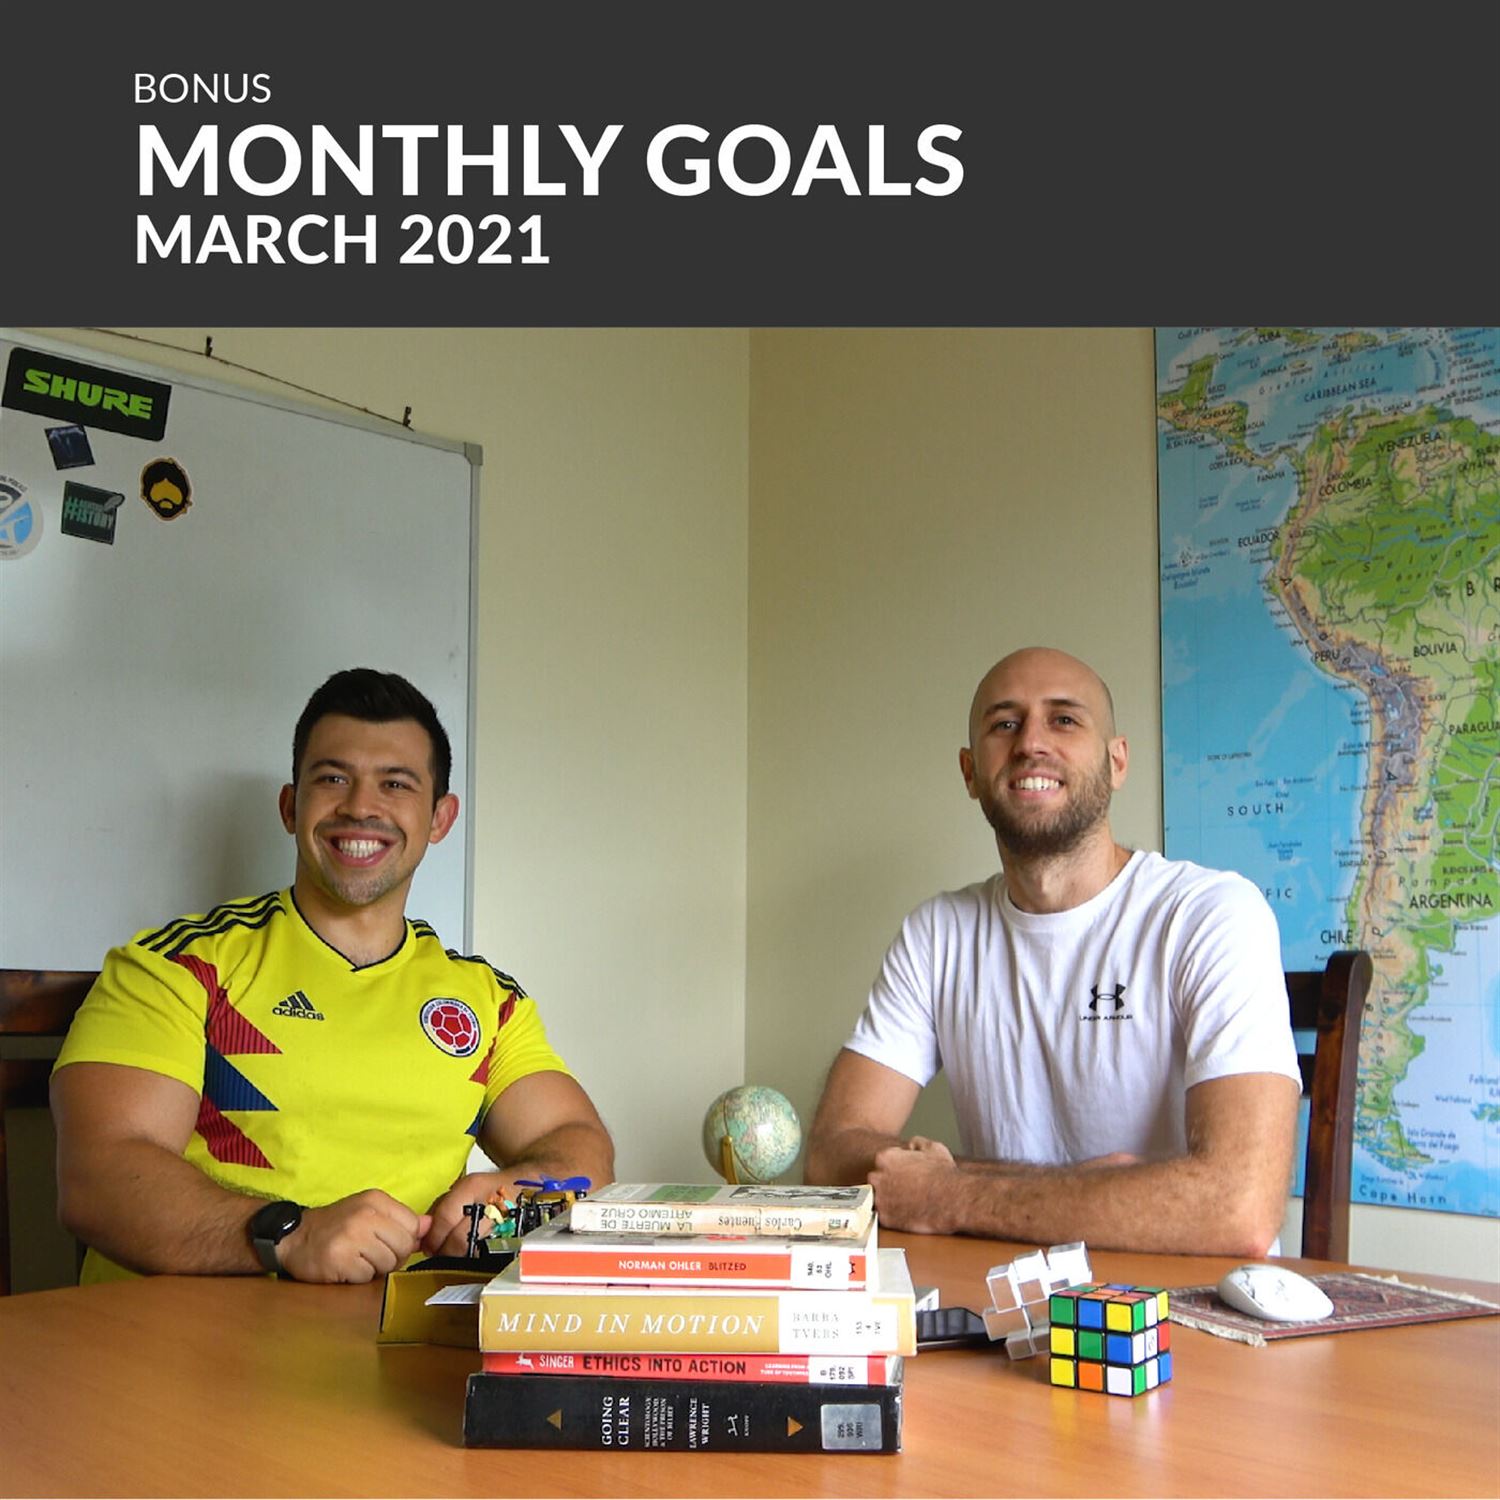 Mere Mortals Monthly Goals - March 2021